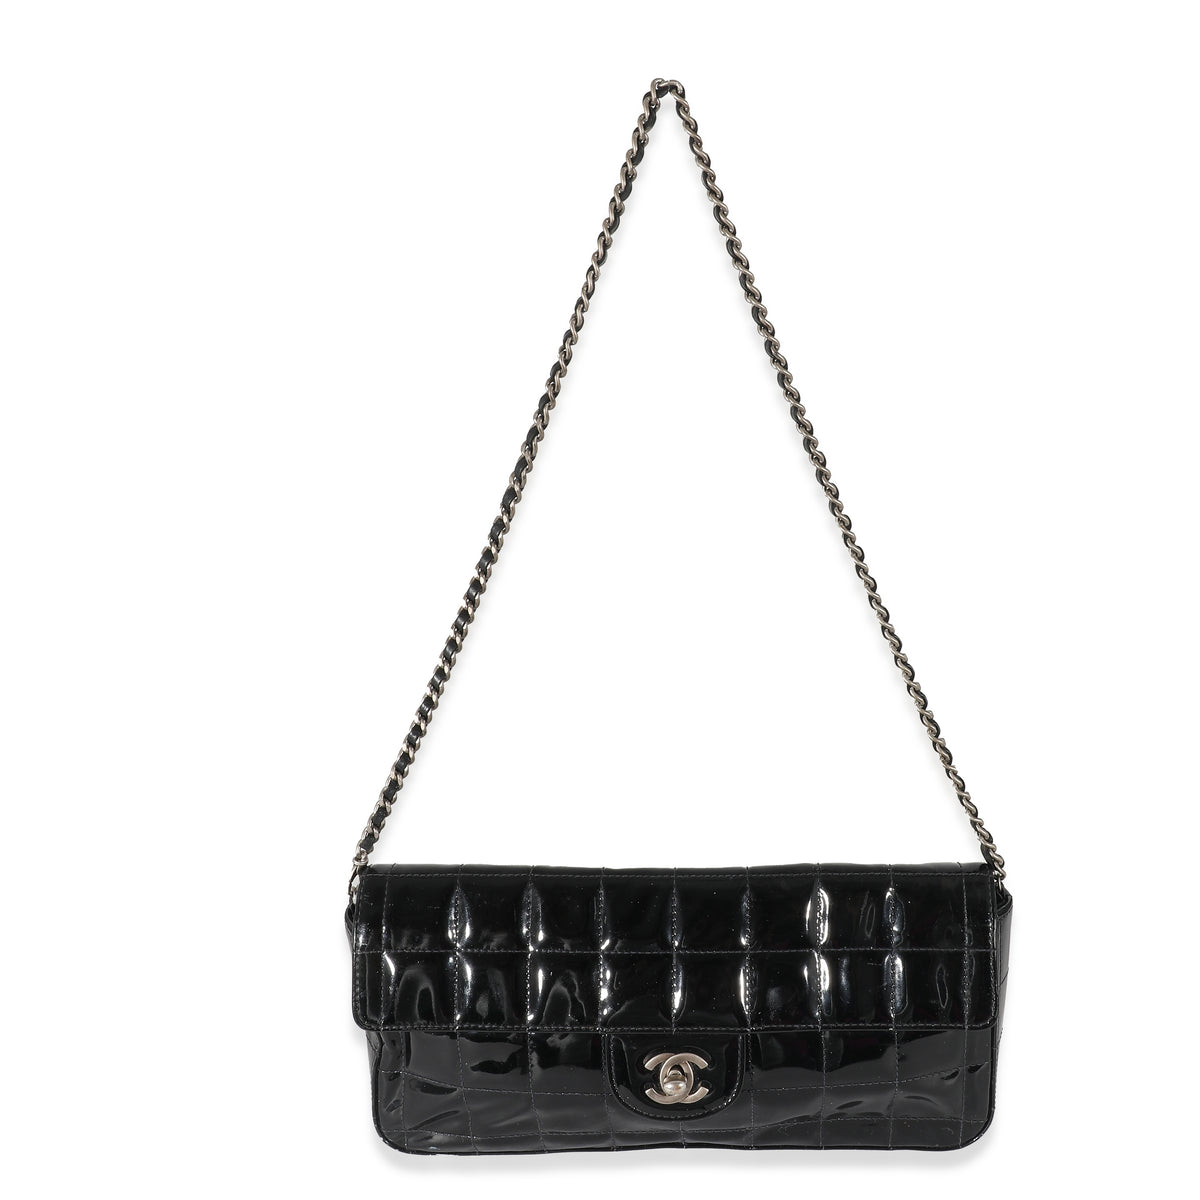 Sold at Auction: Chanel Mini Chocolate Bar Patent Trim Handbag